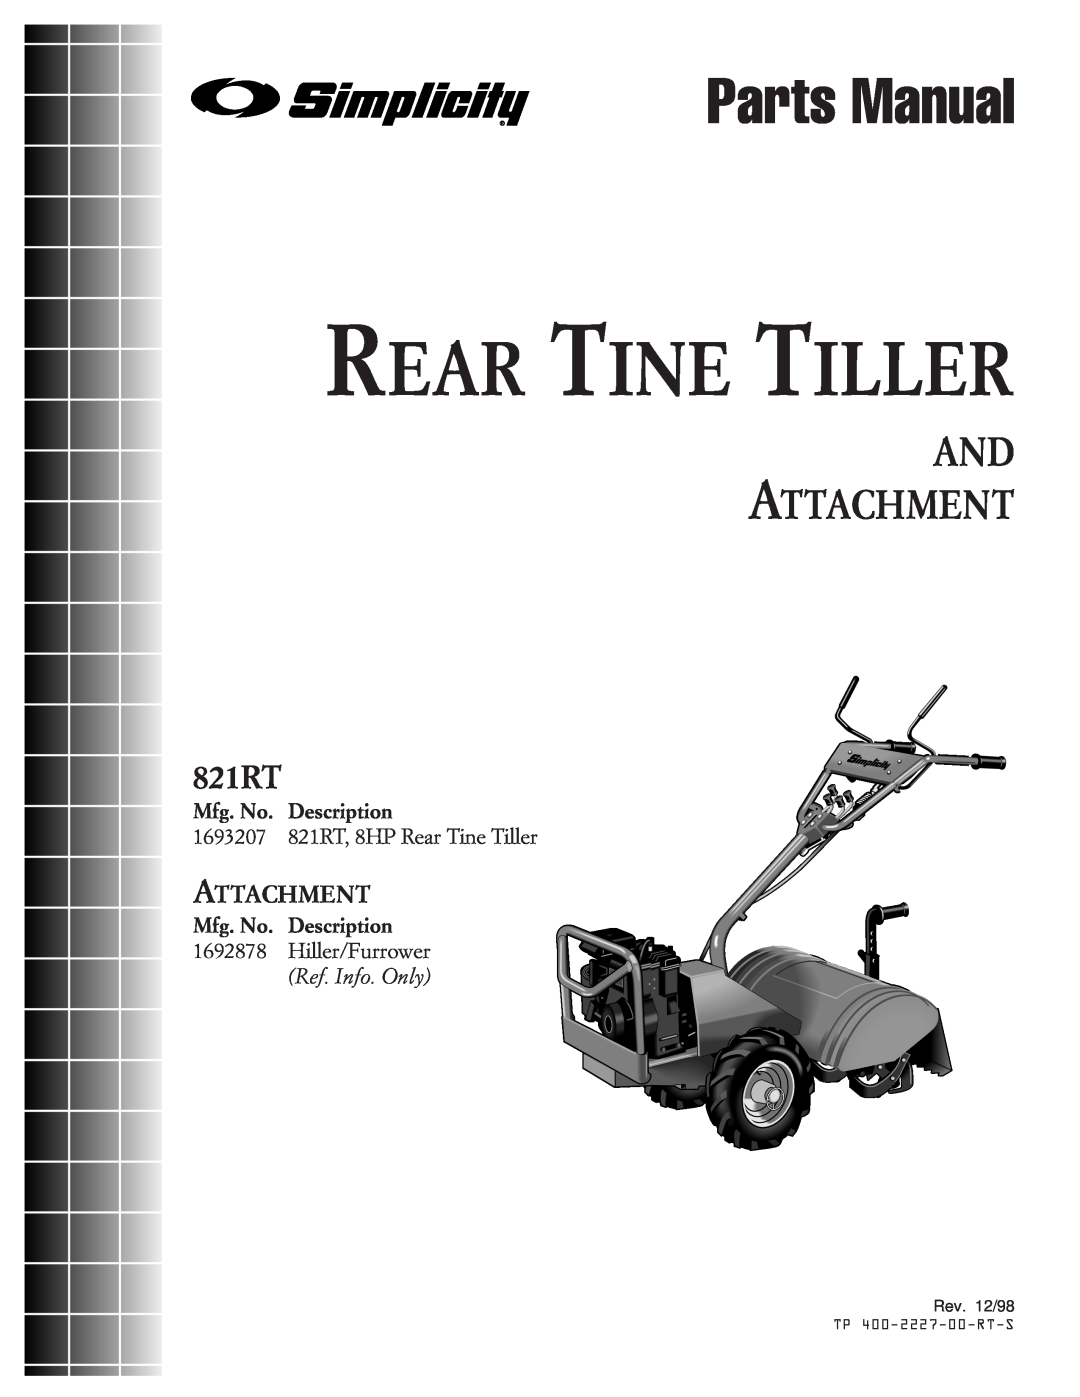 Simplicity 821RT manual Rear Tine Tiller, Parts Manual, And Attachment, Mfg. No. Description, Hiller/Furrower, Rev. 12/98 